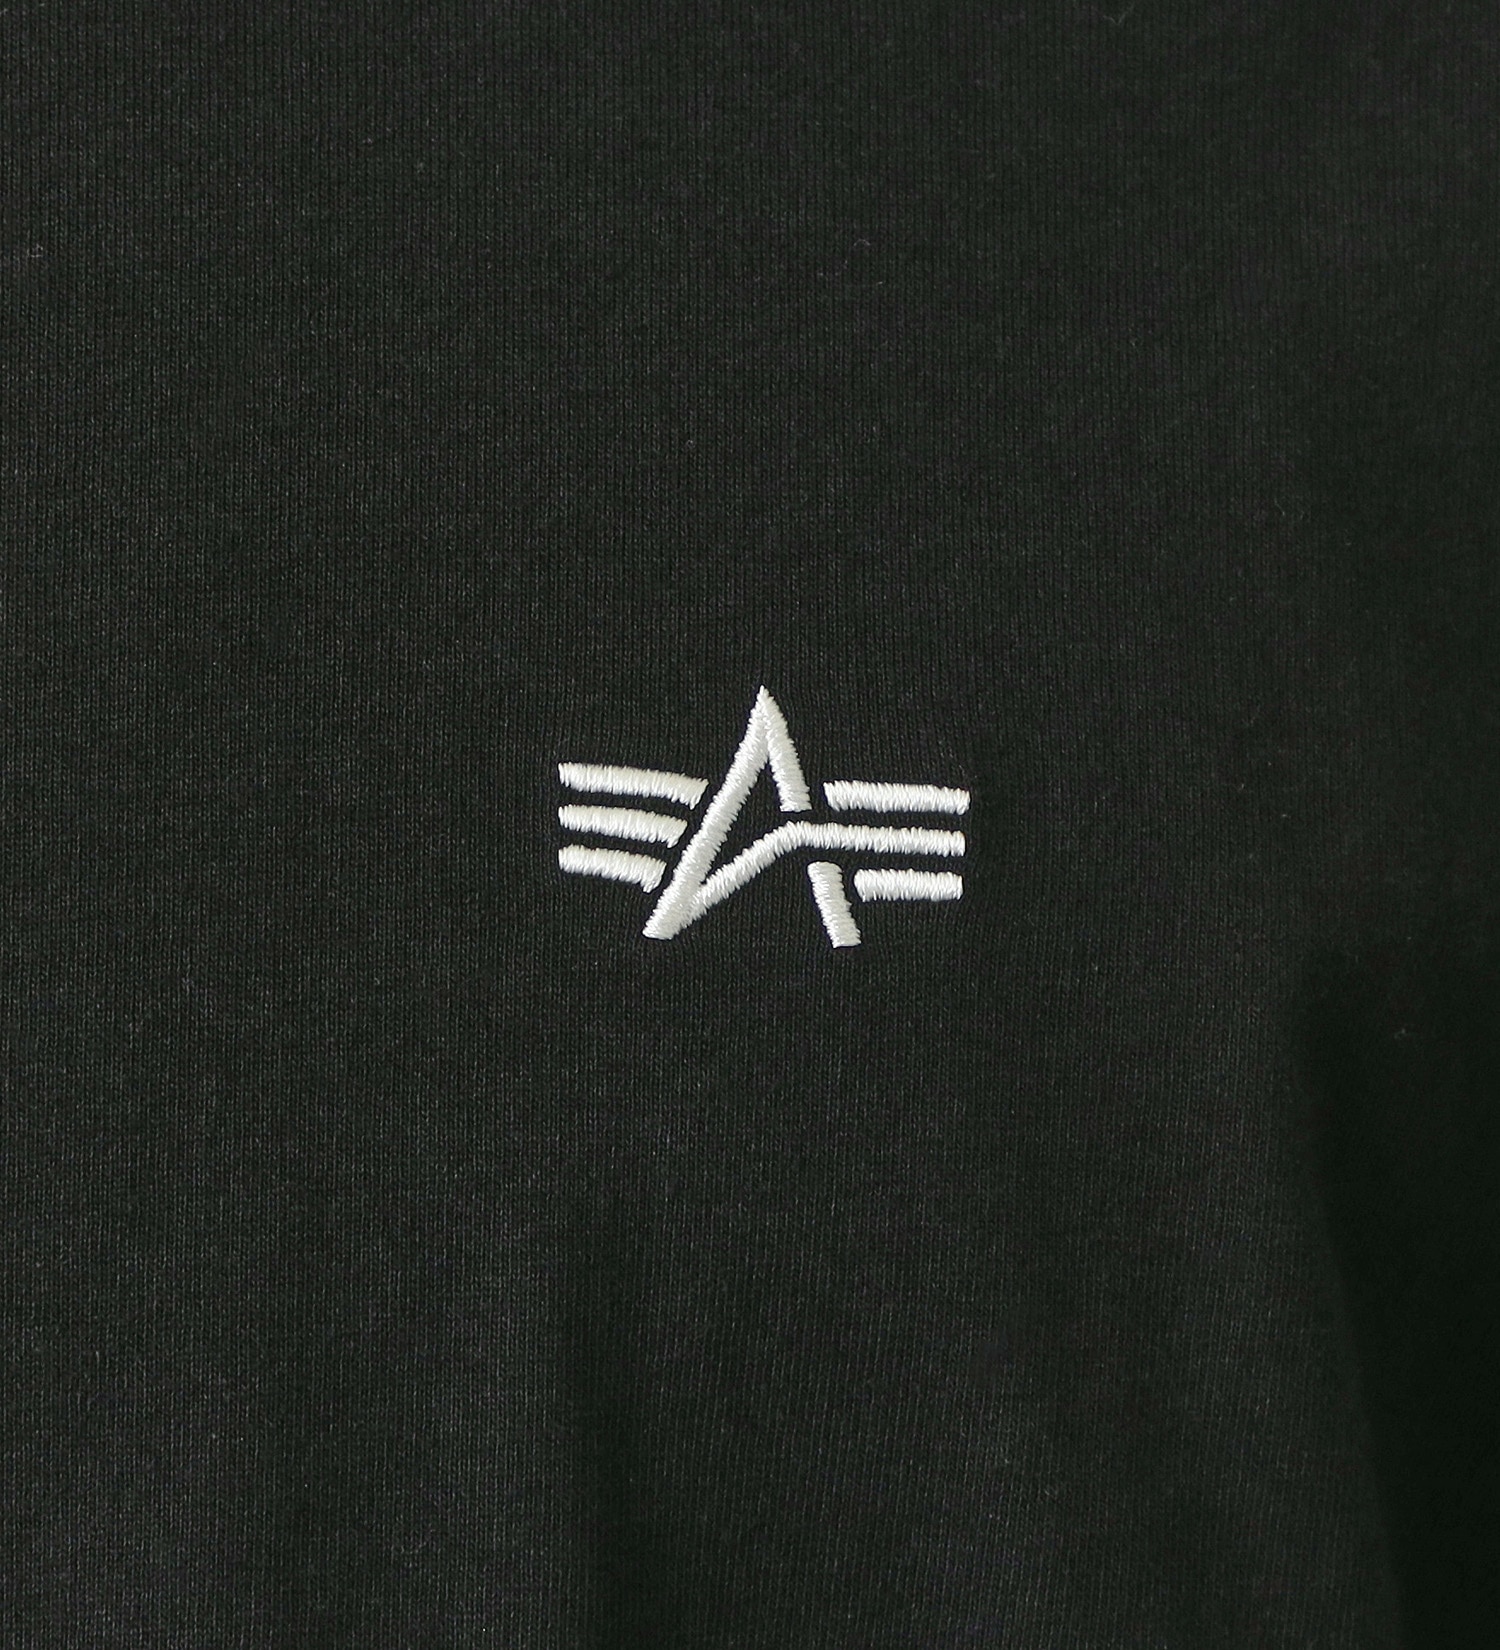 ALPHA(アルファ)のバックプリントボックスロゴ 長袖Tシャツ(COCKPIT)|トップス/Tシャツ/カットソー/メンズ|ブラック